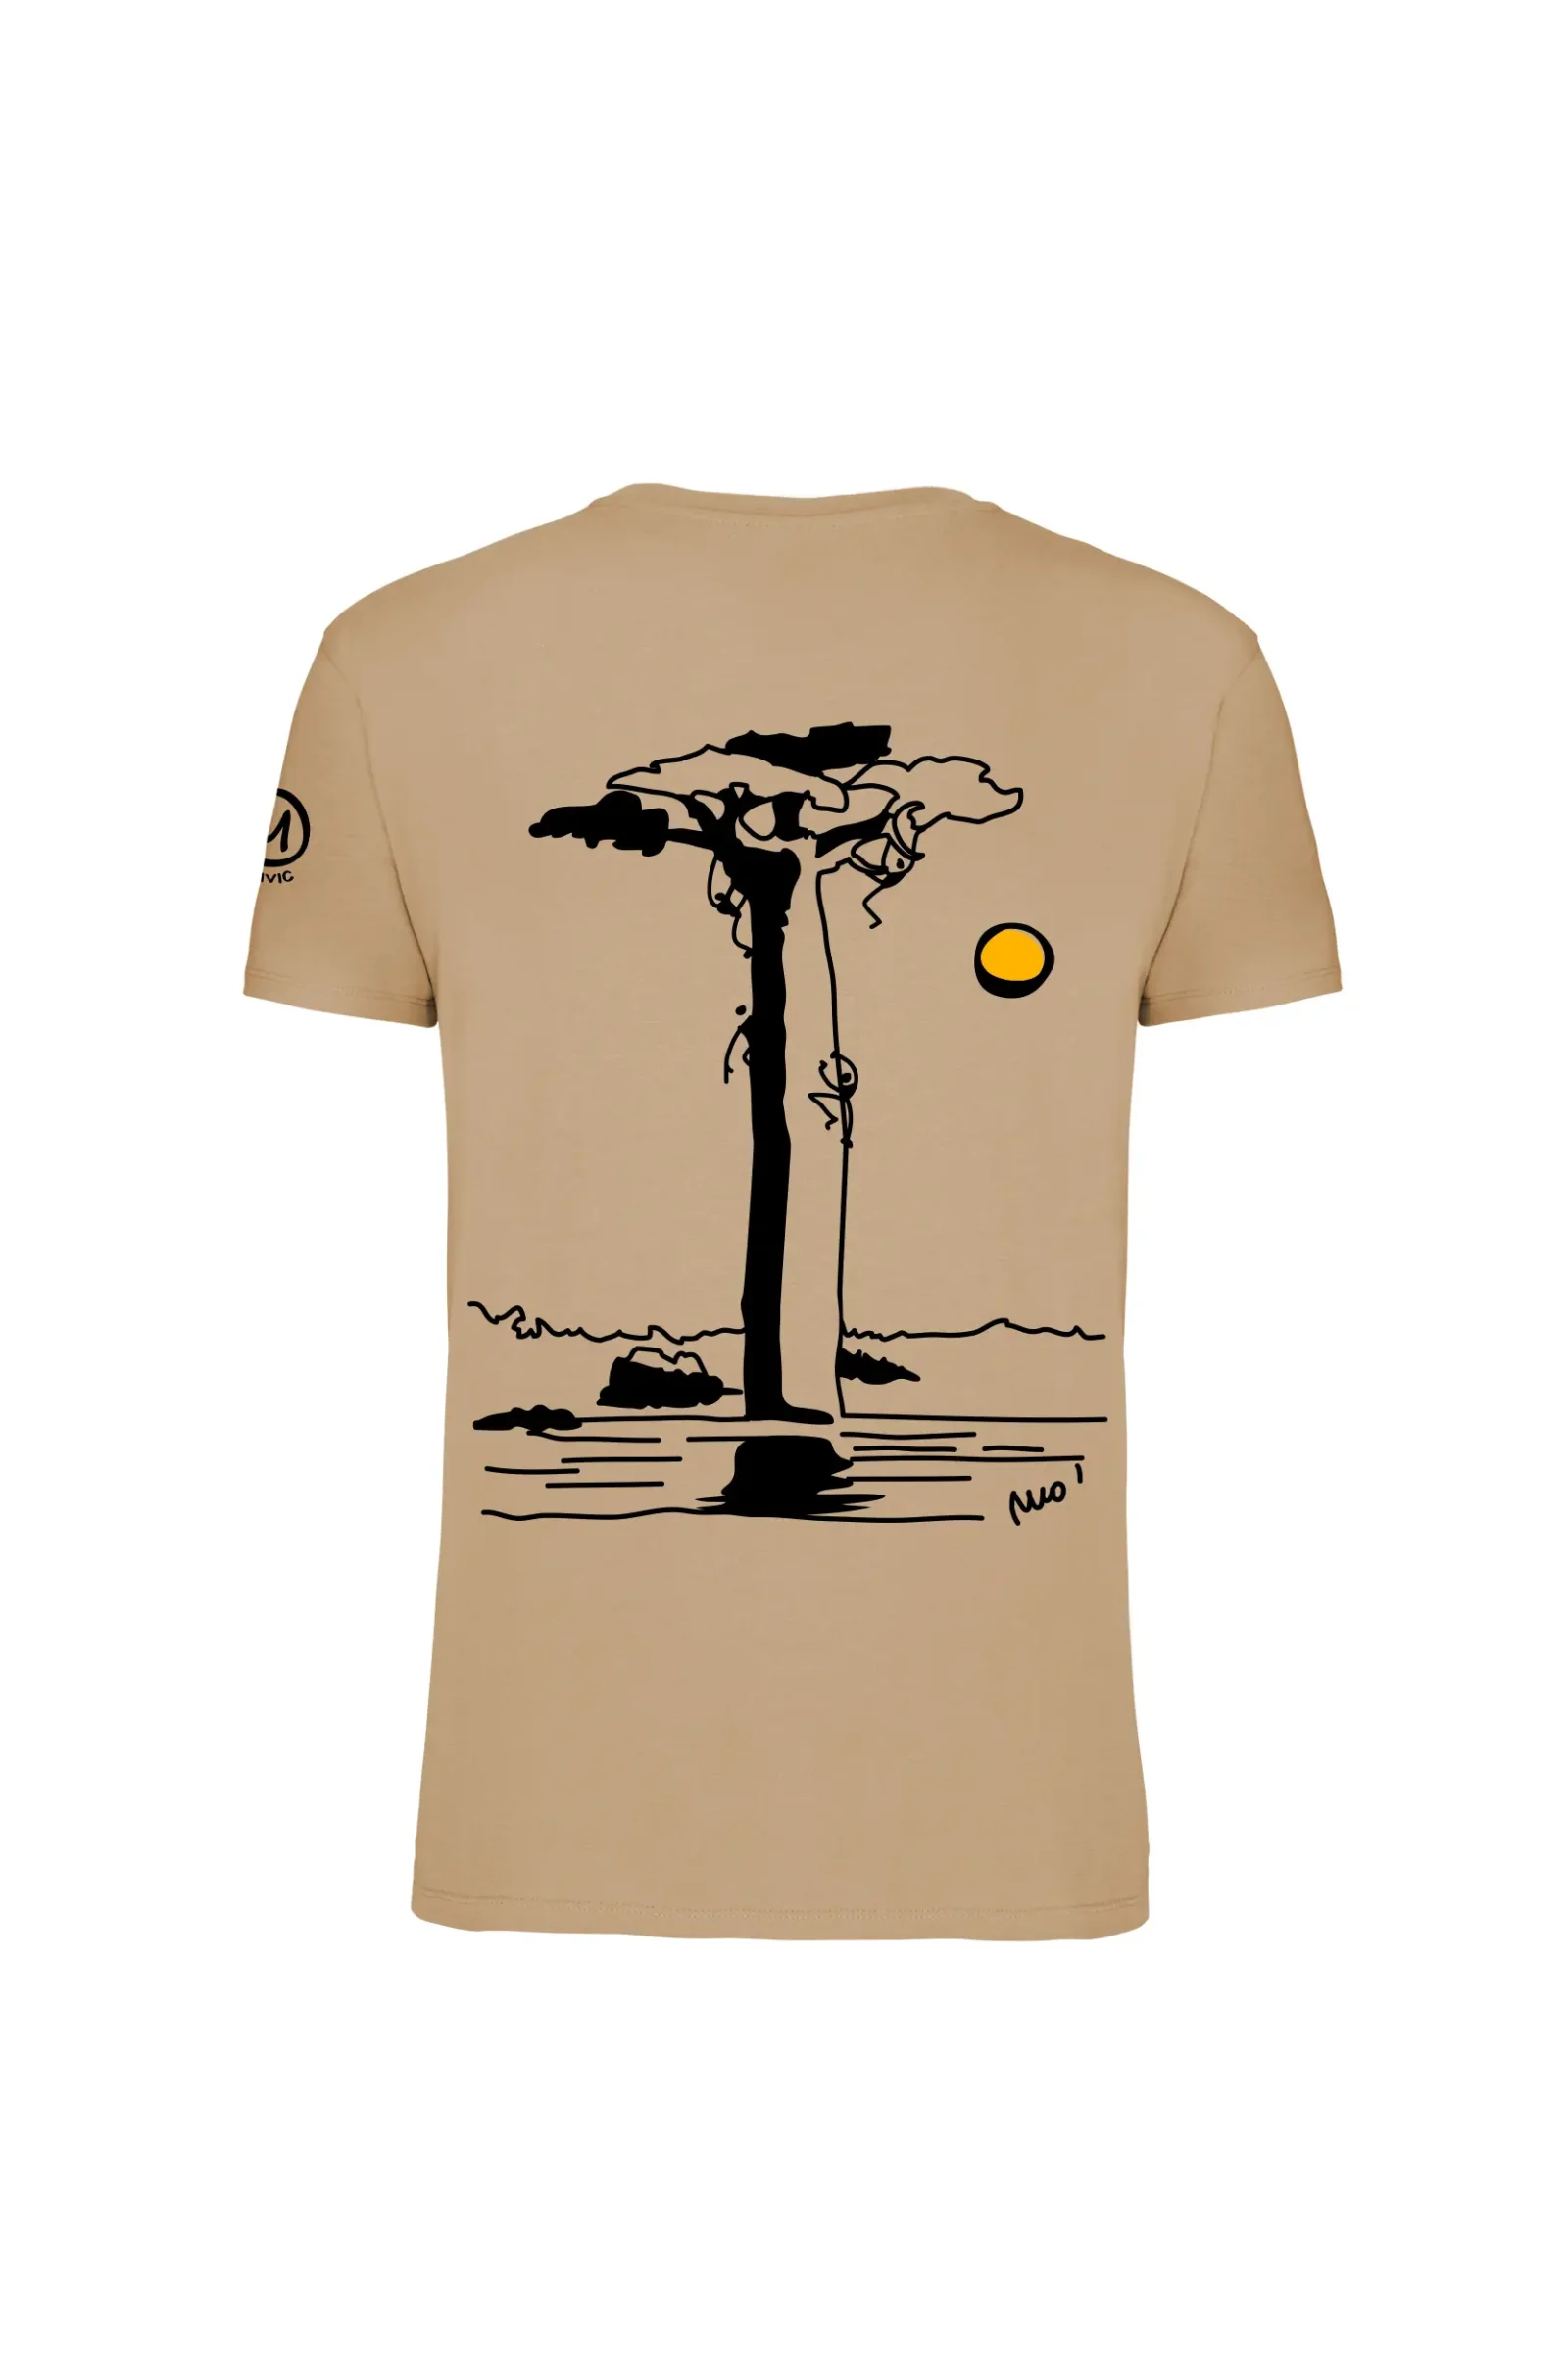 T-shirt arrampicata uomo - cotone organico sabbia - "Baobab" - HASH ORGANIC MONVIC